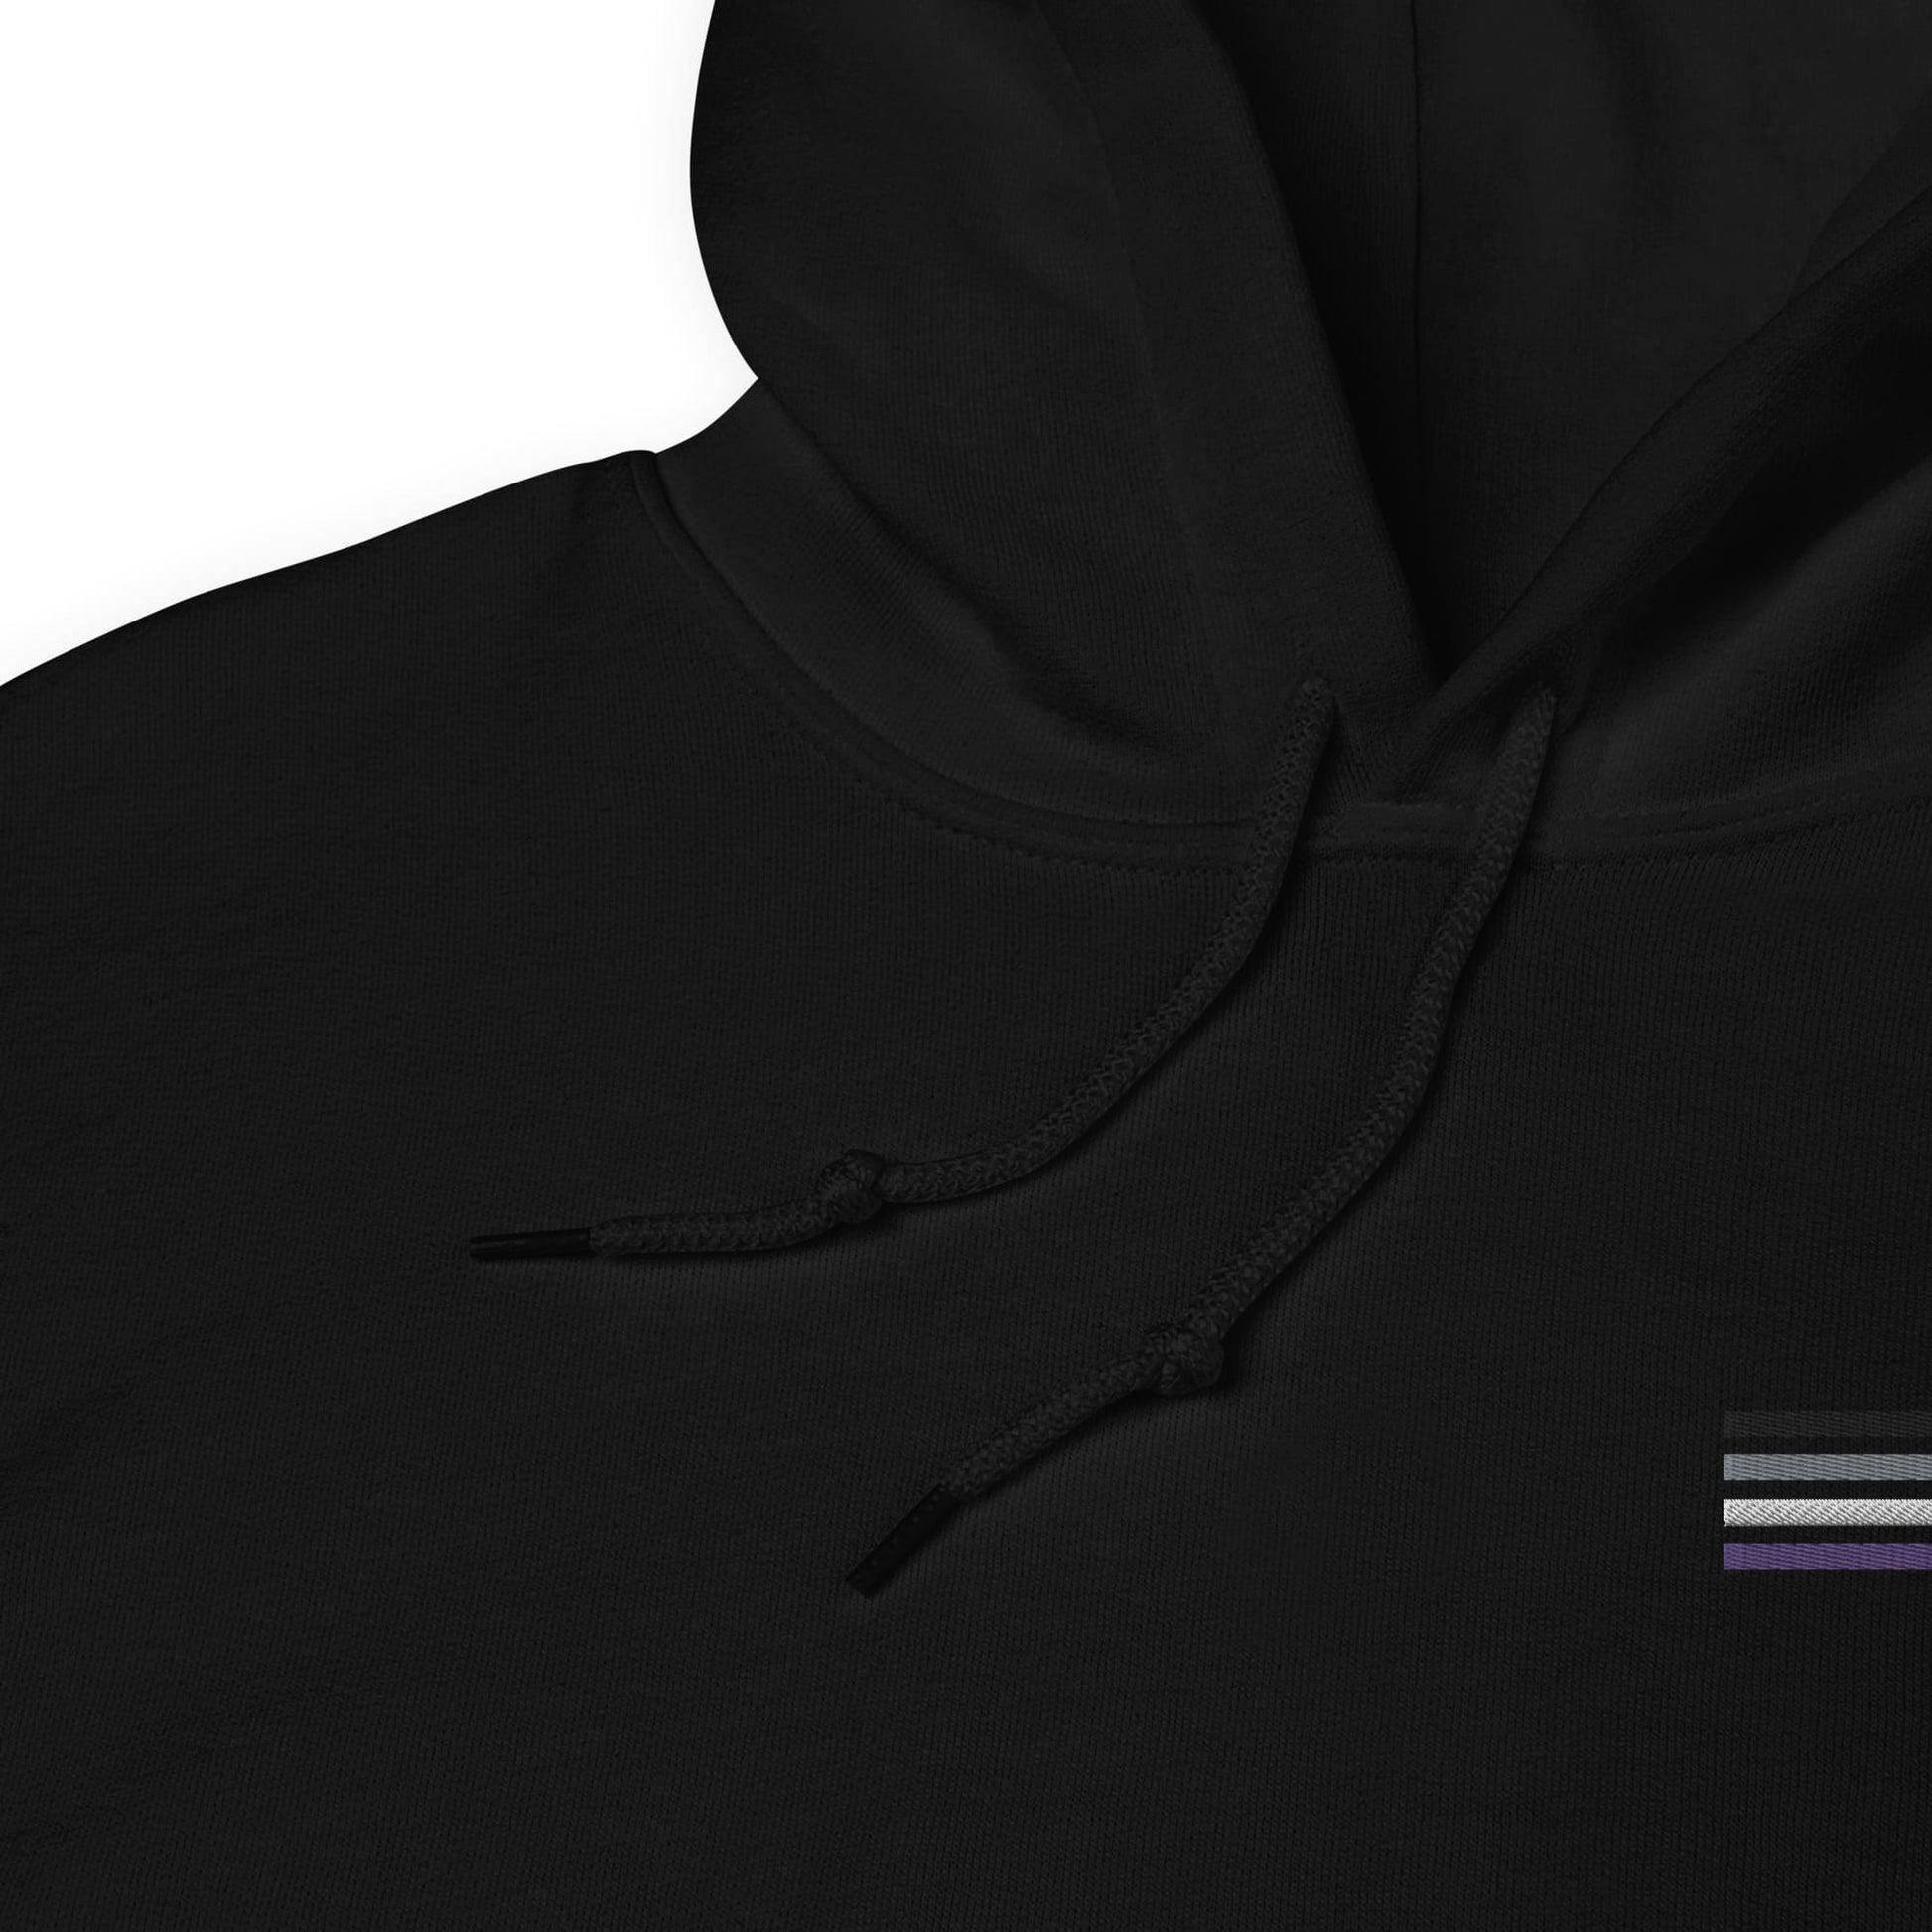 asexual hoodie, subtle ace pride flag embroidered pocket design hooded sweatshirt, strings